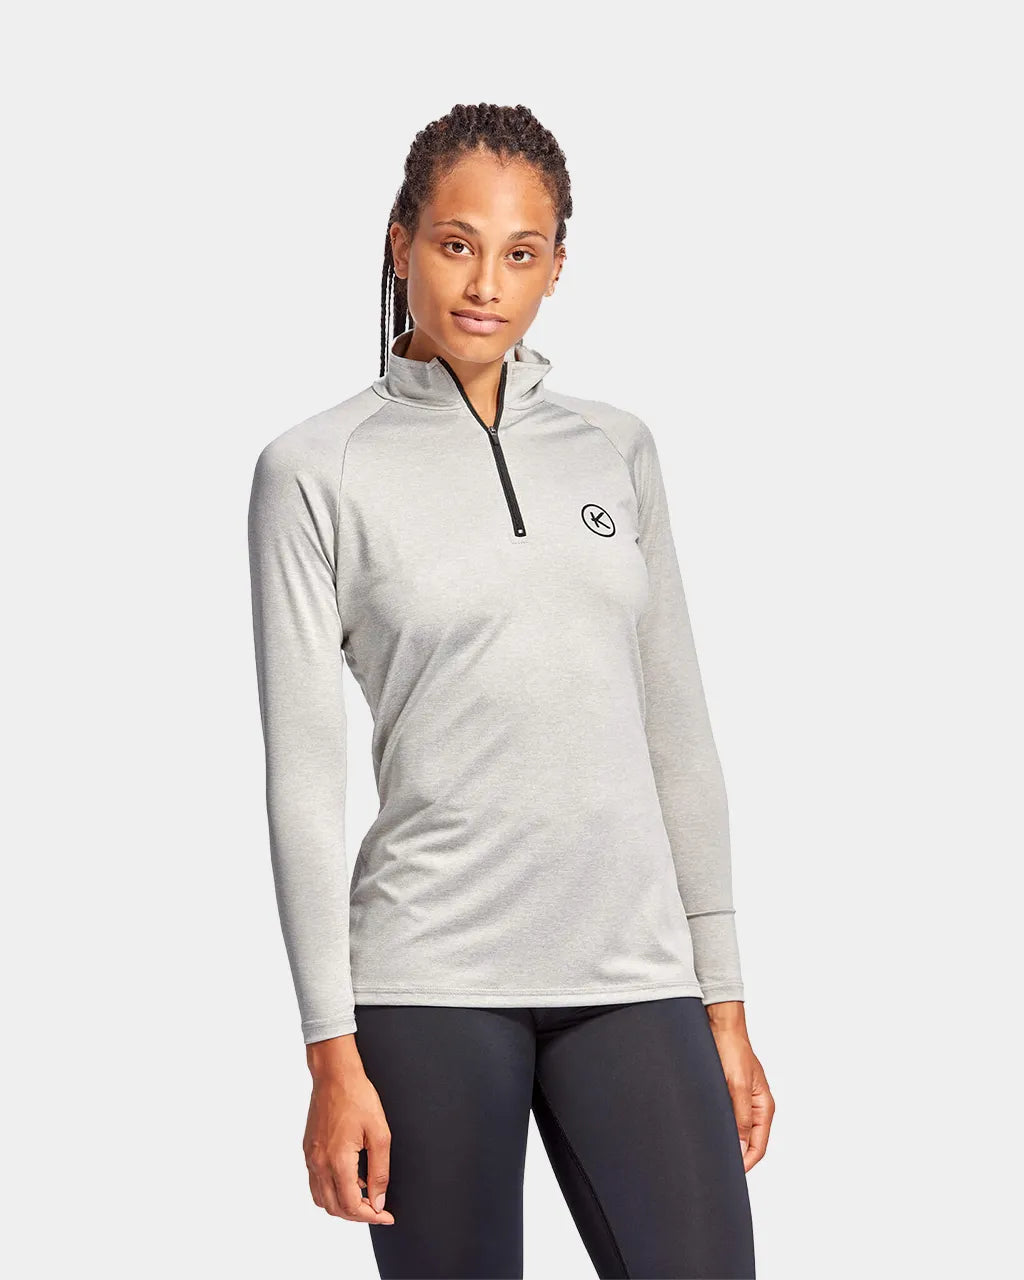 KYMIRA CHARGE Infrared Quarter Zip Women's Long Sleeve Top - Grey